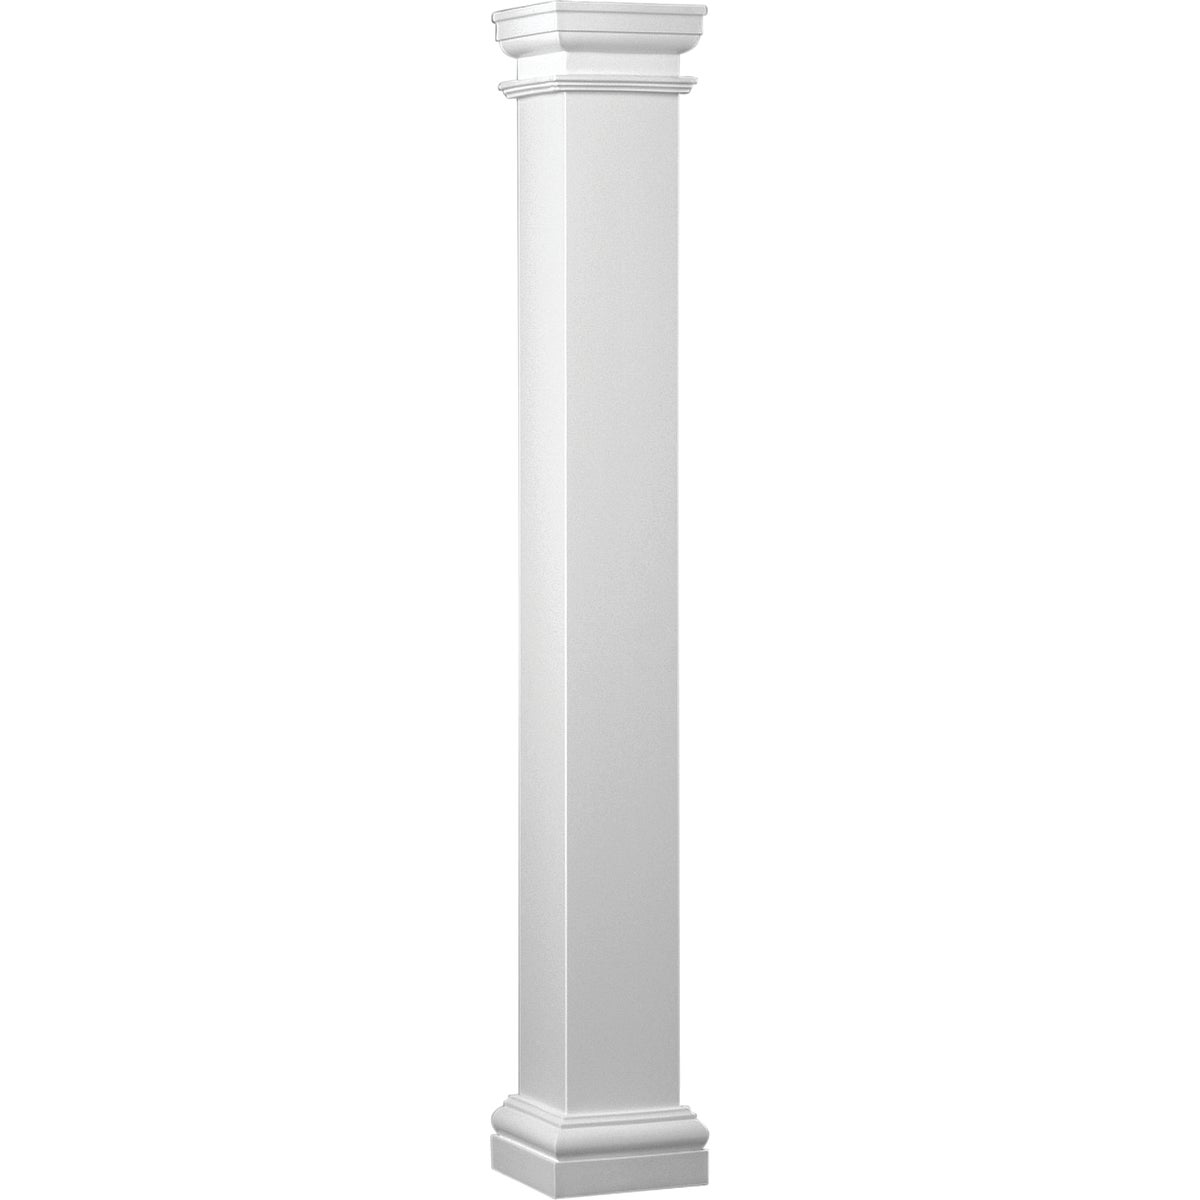 Item 160037, Duralite fiberglass column that is decorative and load bearing.